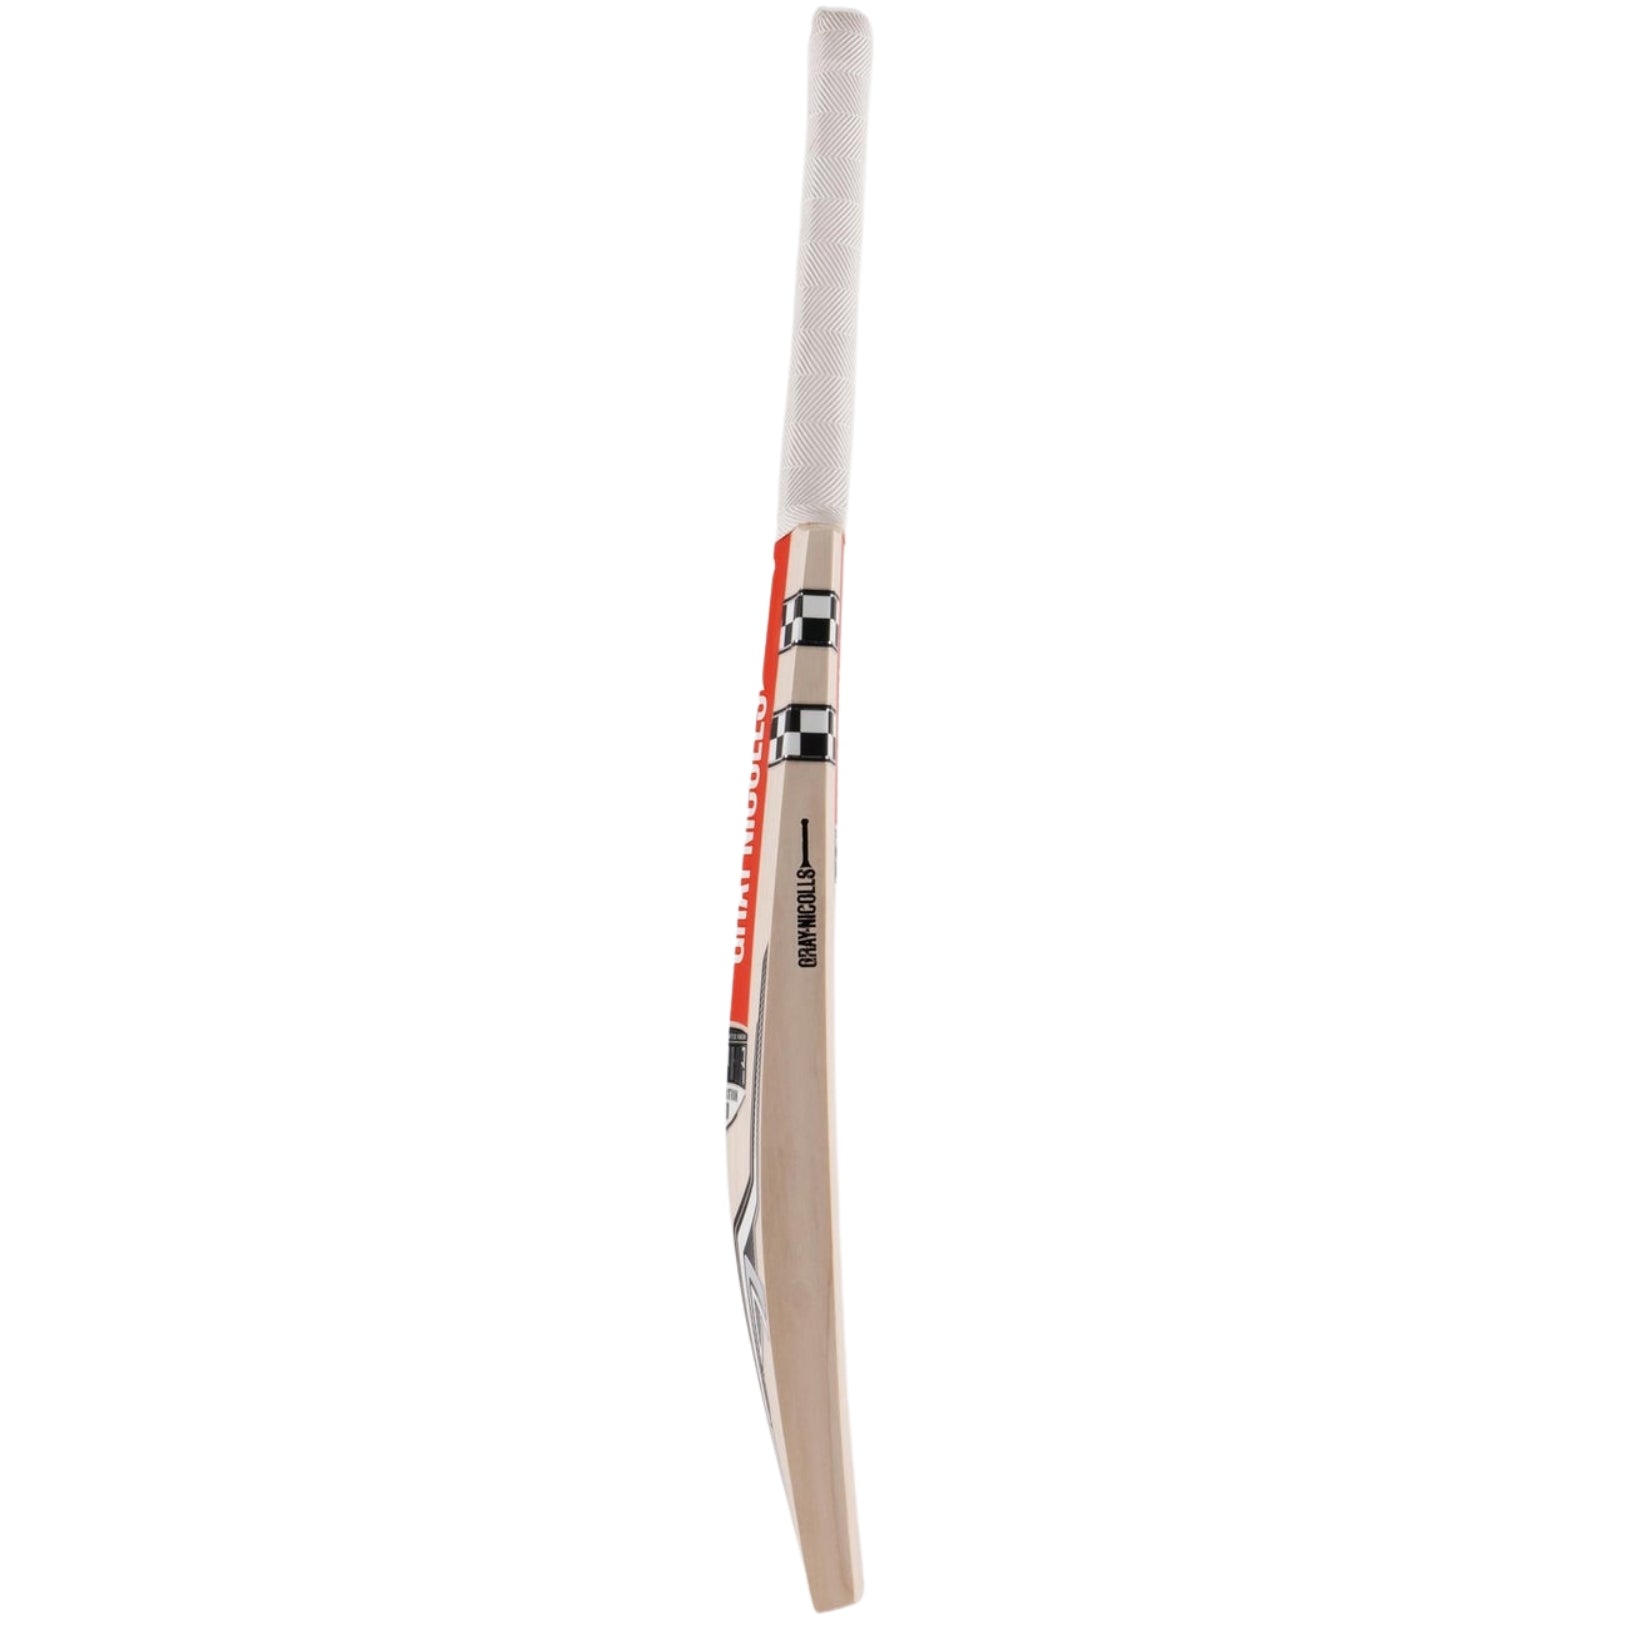 Gray Nicolls Cricket Bat Alpha Gen 1.0 5-Star Junior English Willow (size 6)